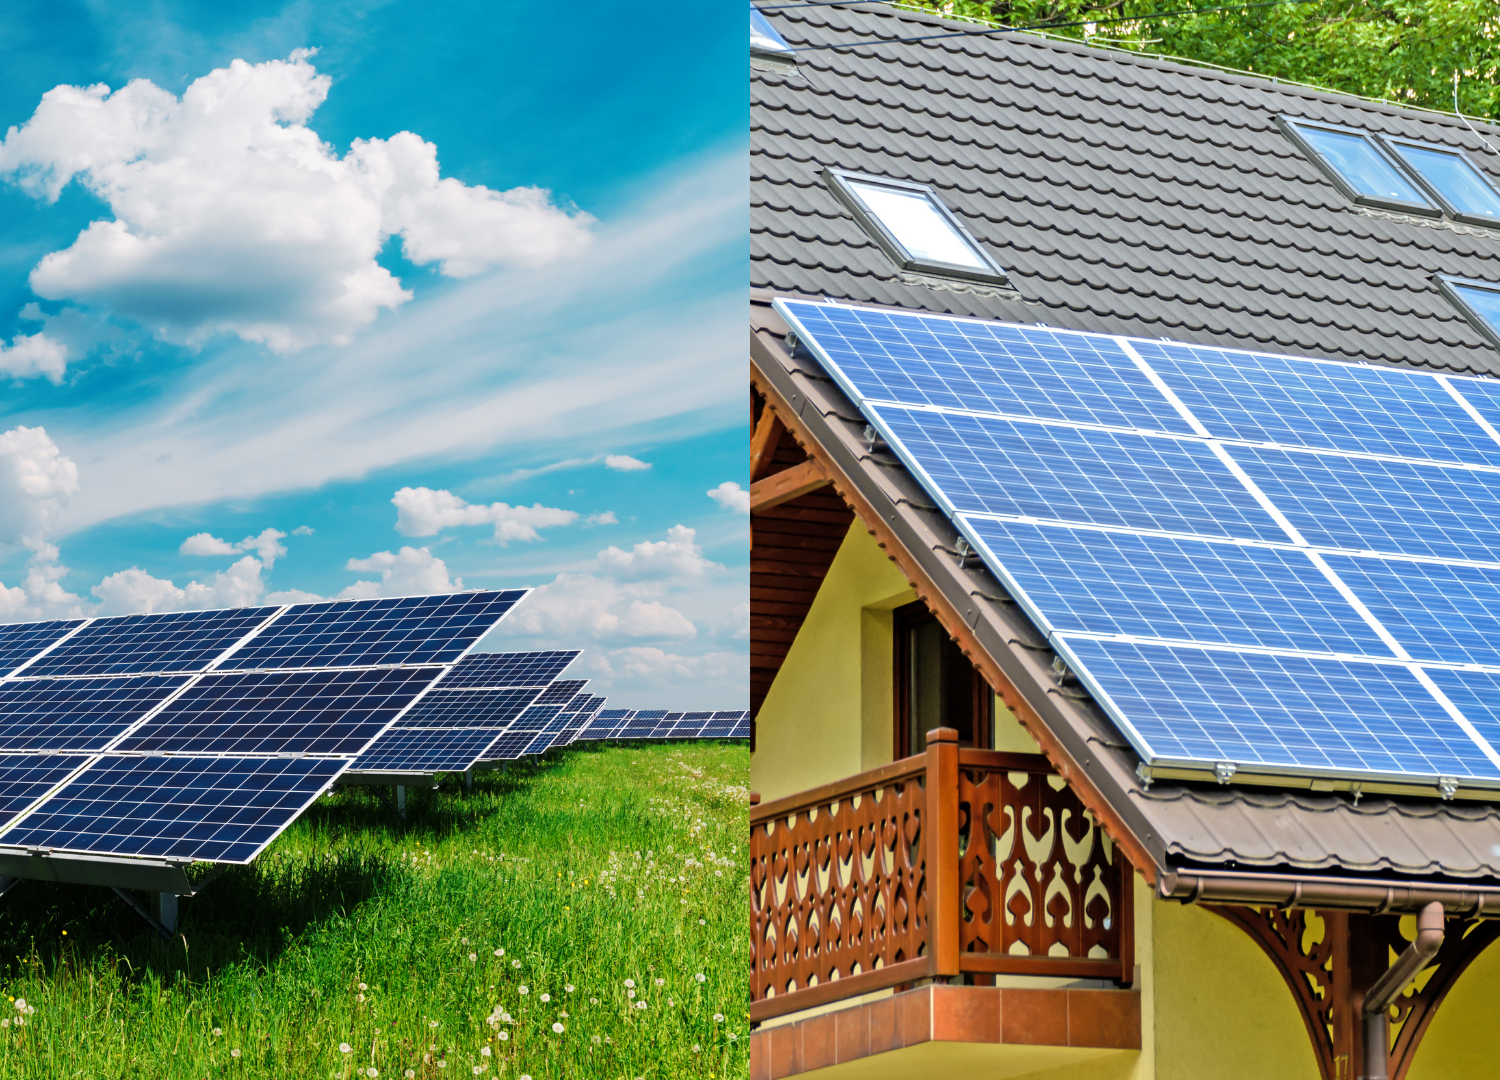 Saint charles solar installation, solar array, solar panels for home